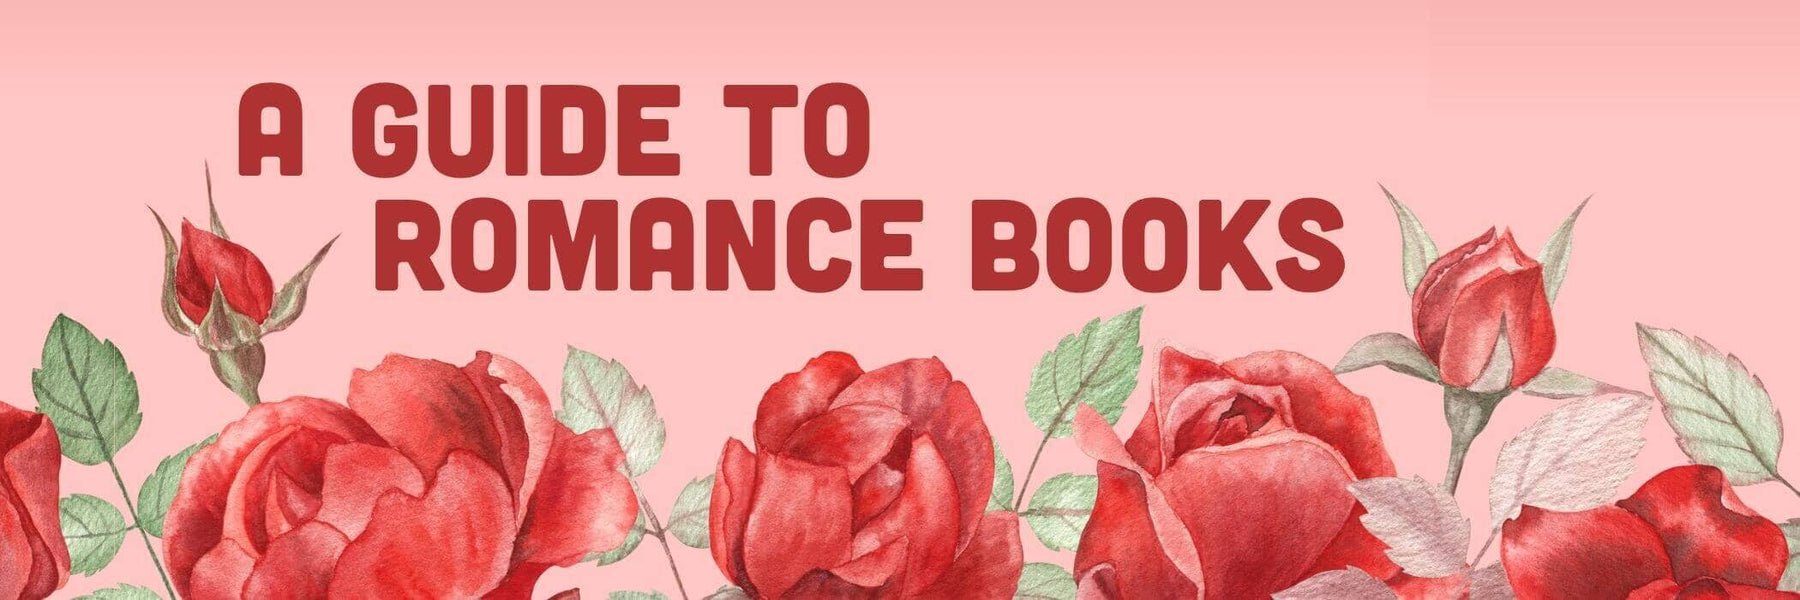 Books2Door's Beginner's Guide to the Romance Genre: Where to Start